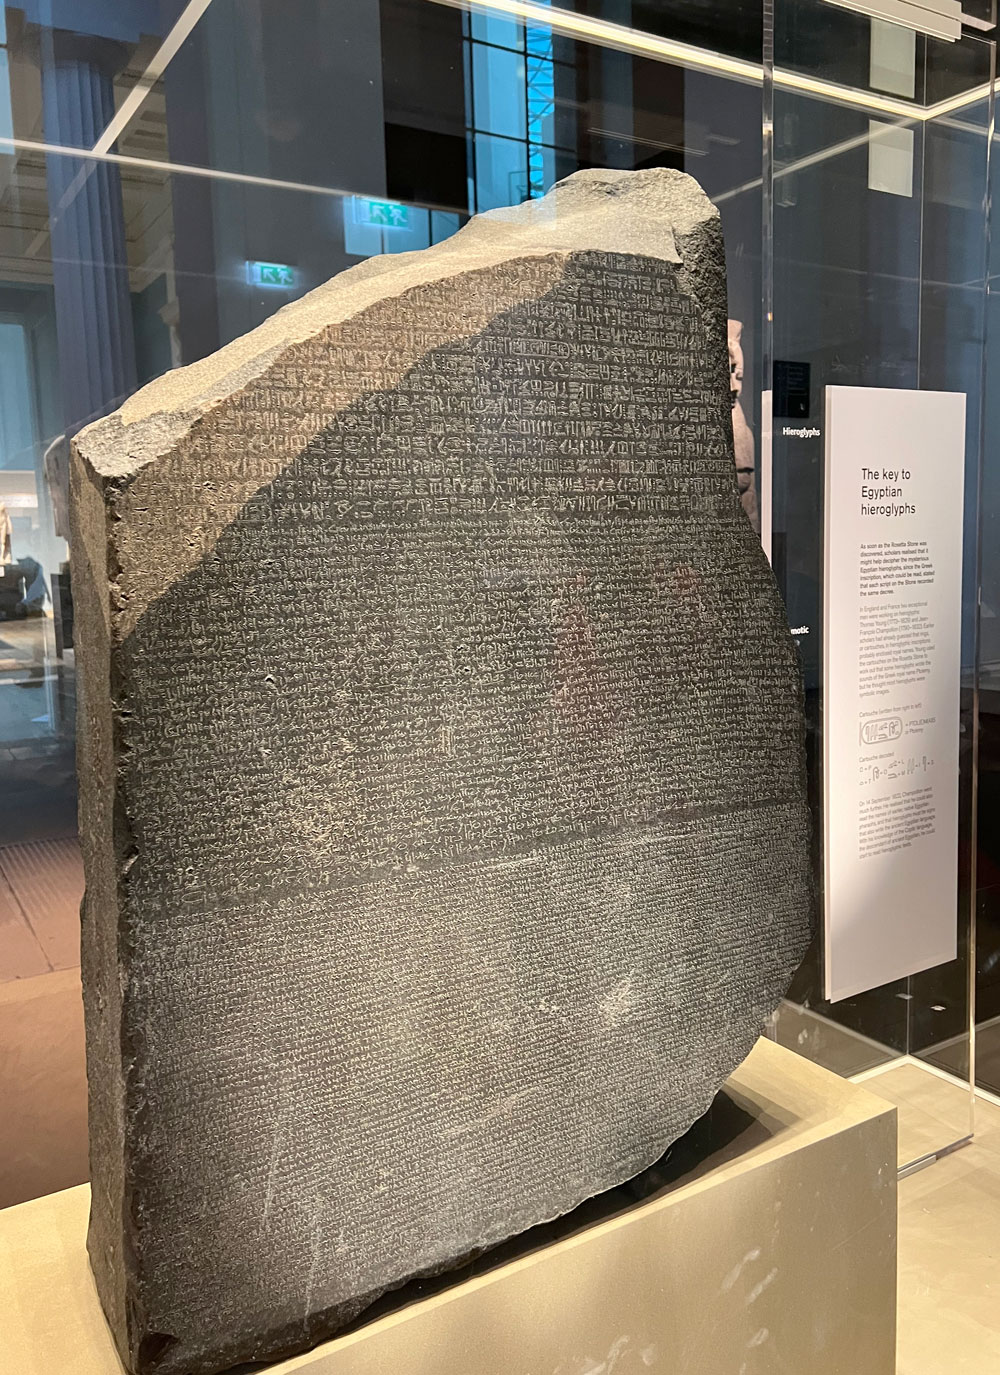 Rosetta Stone in London England at the British Museum